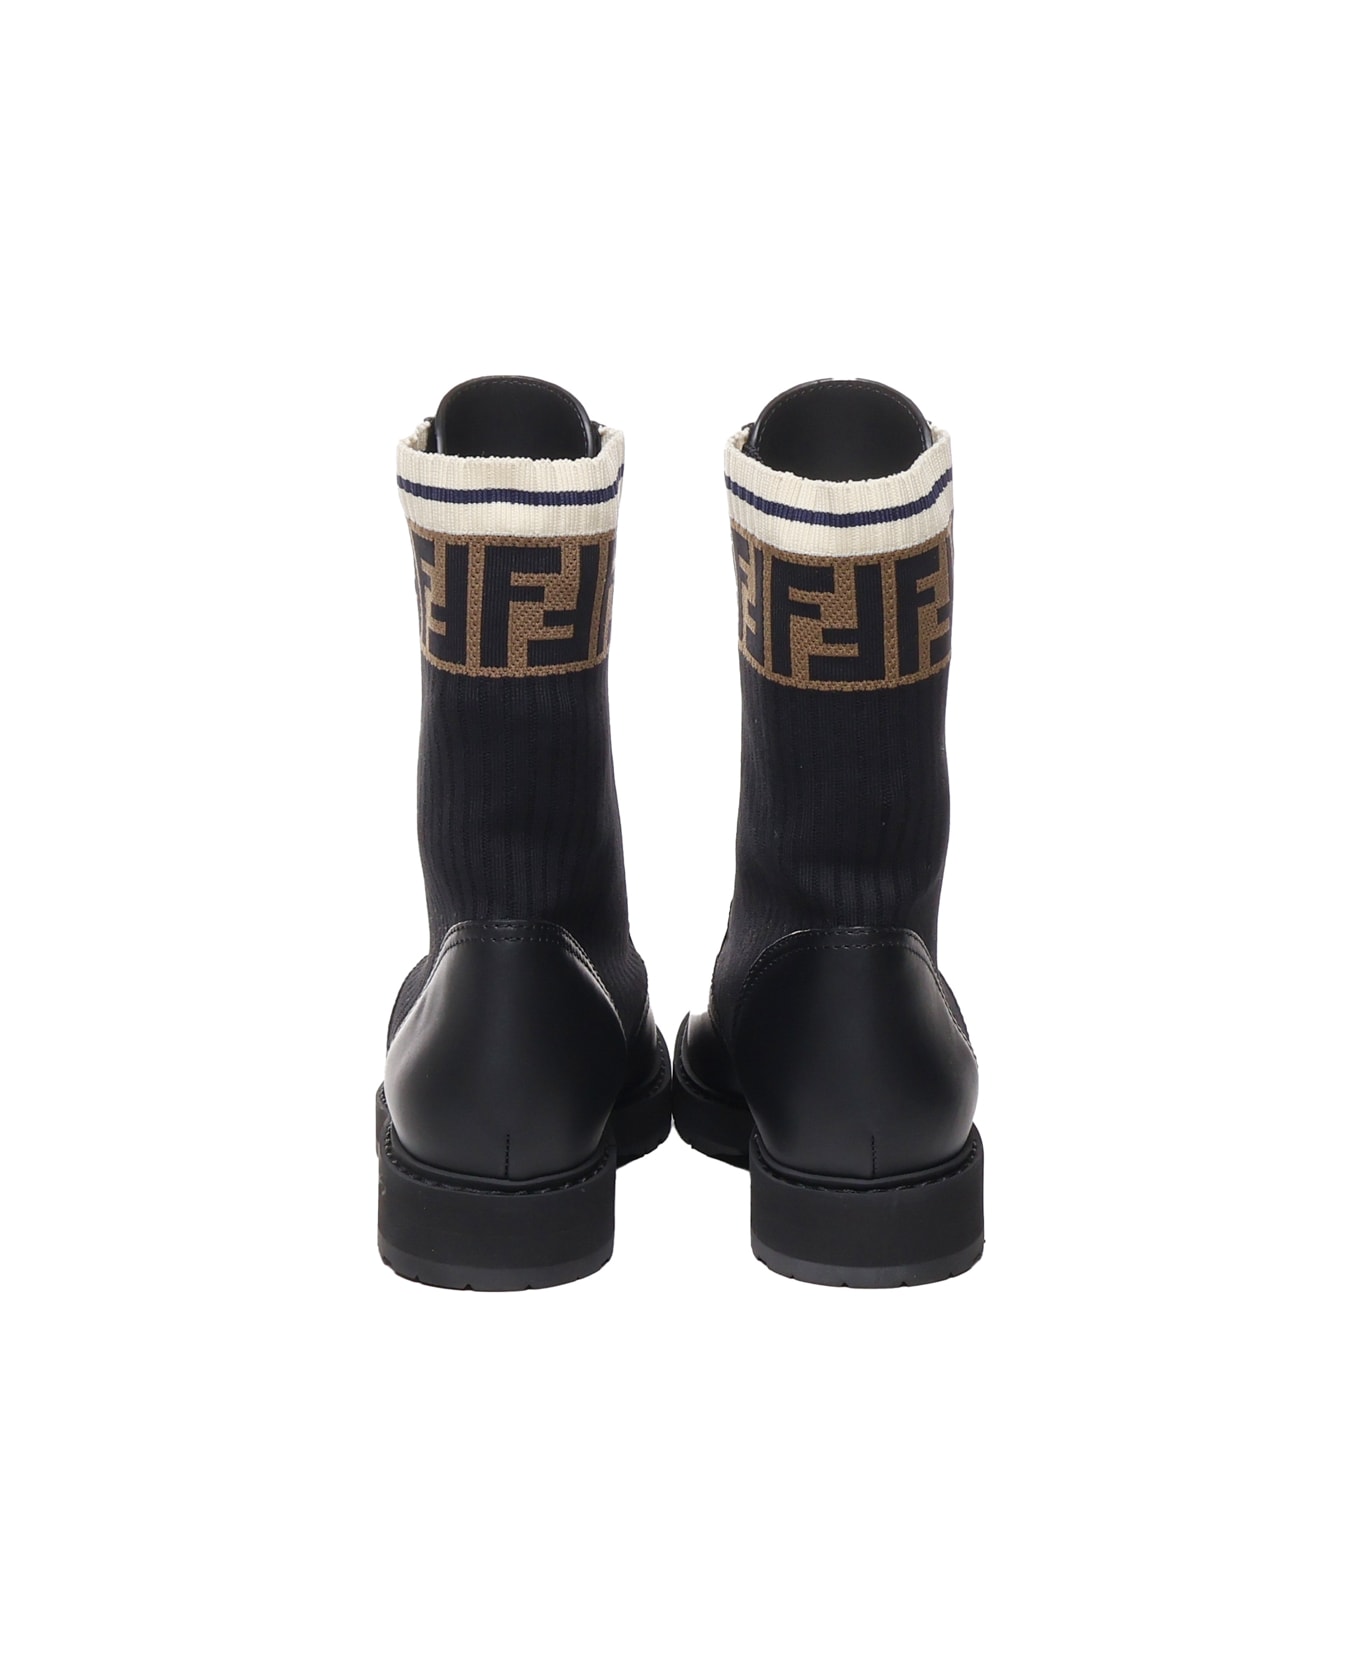 Fendi Leather And Mesh Biker Boots With Ff Monogram - Nero/tab.nero marino